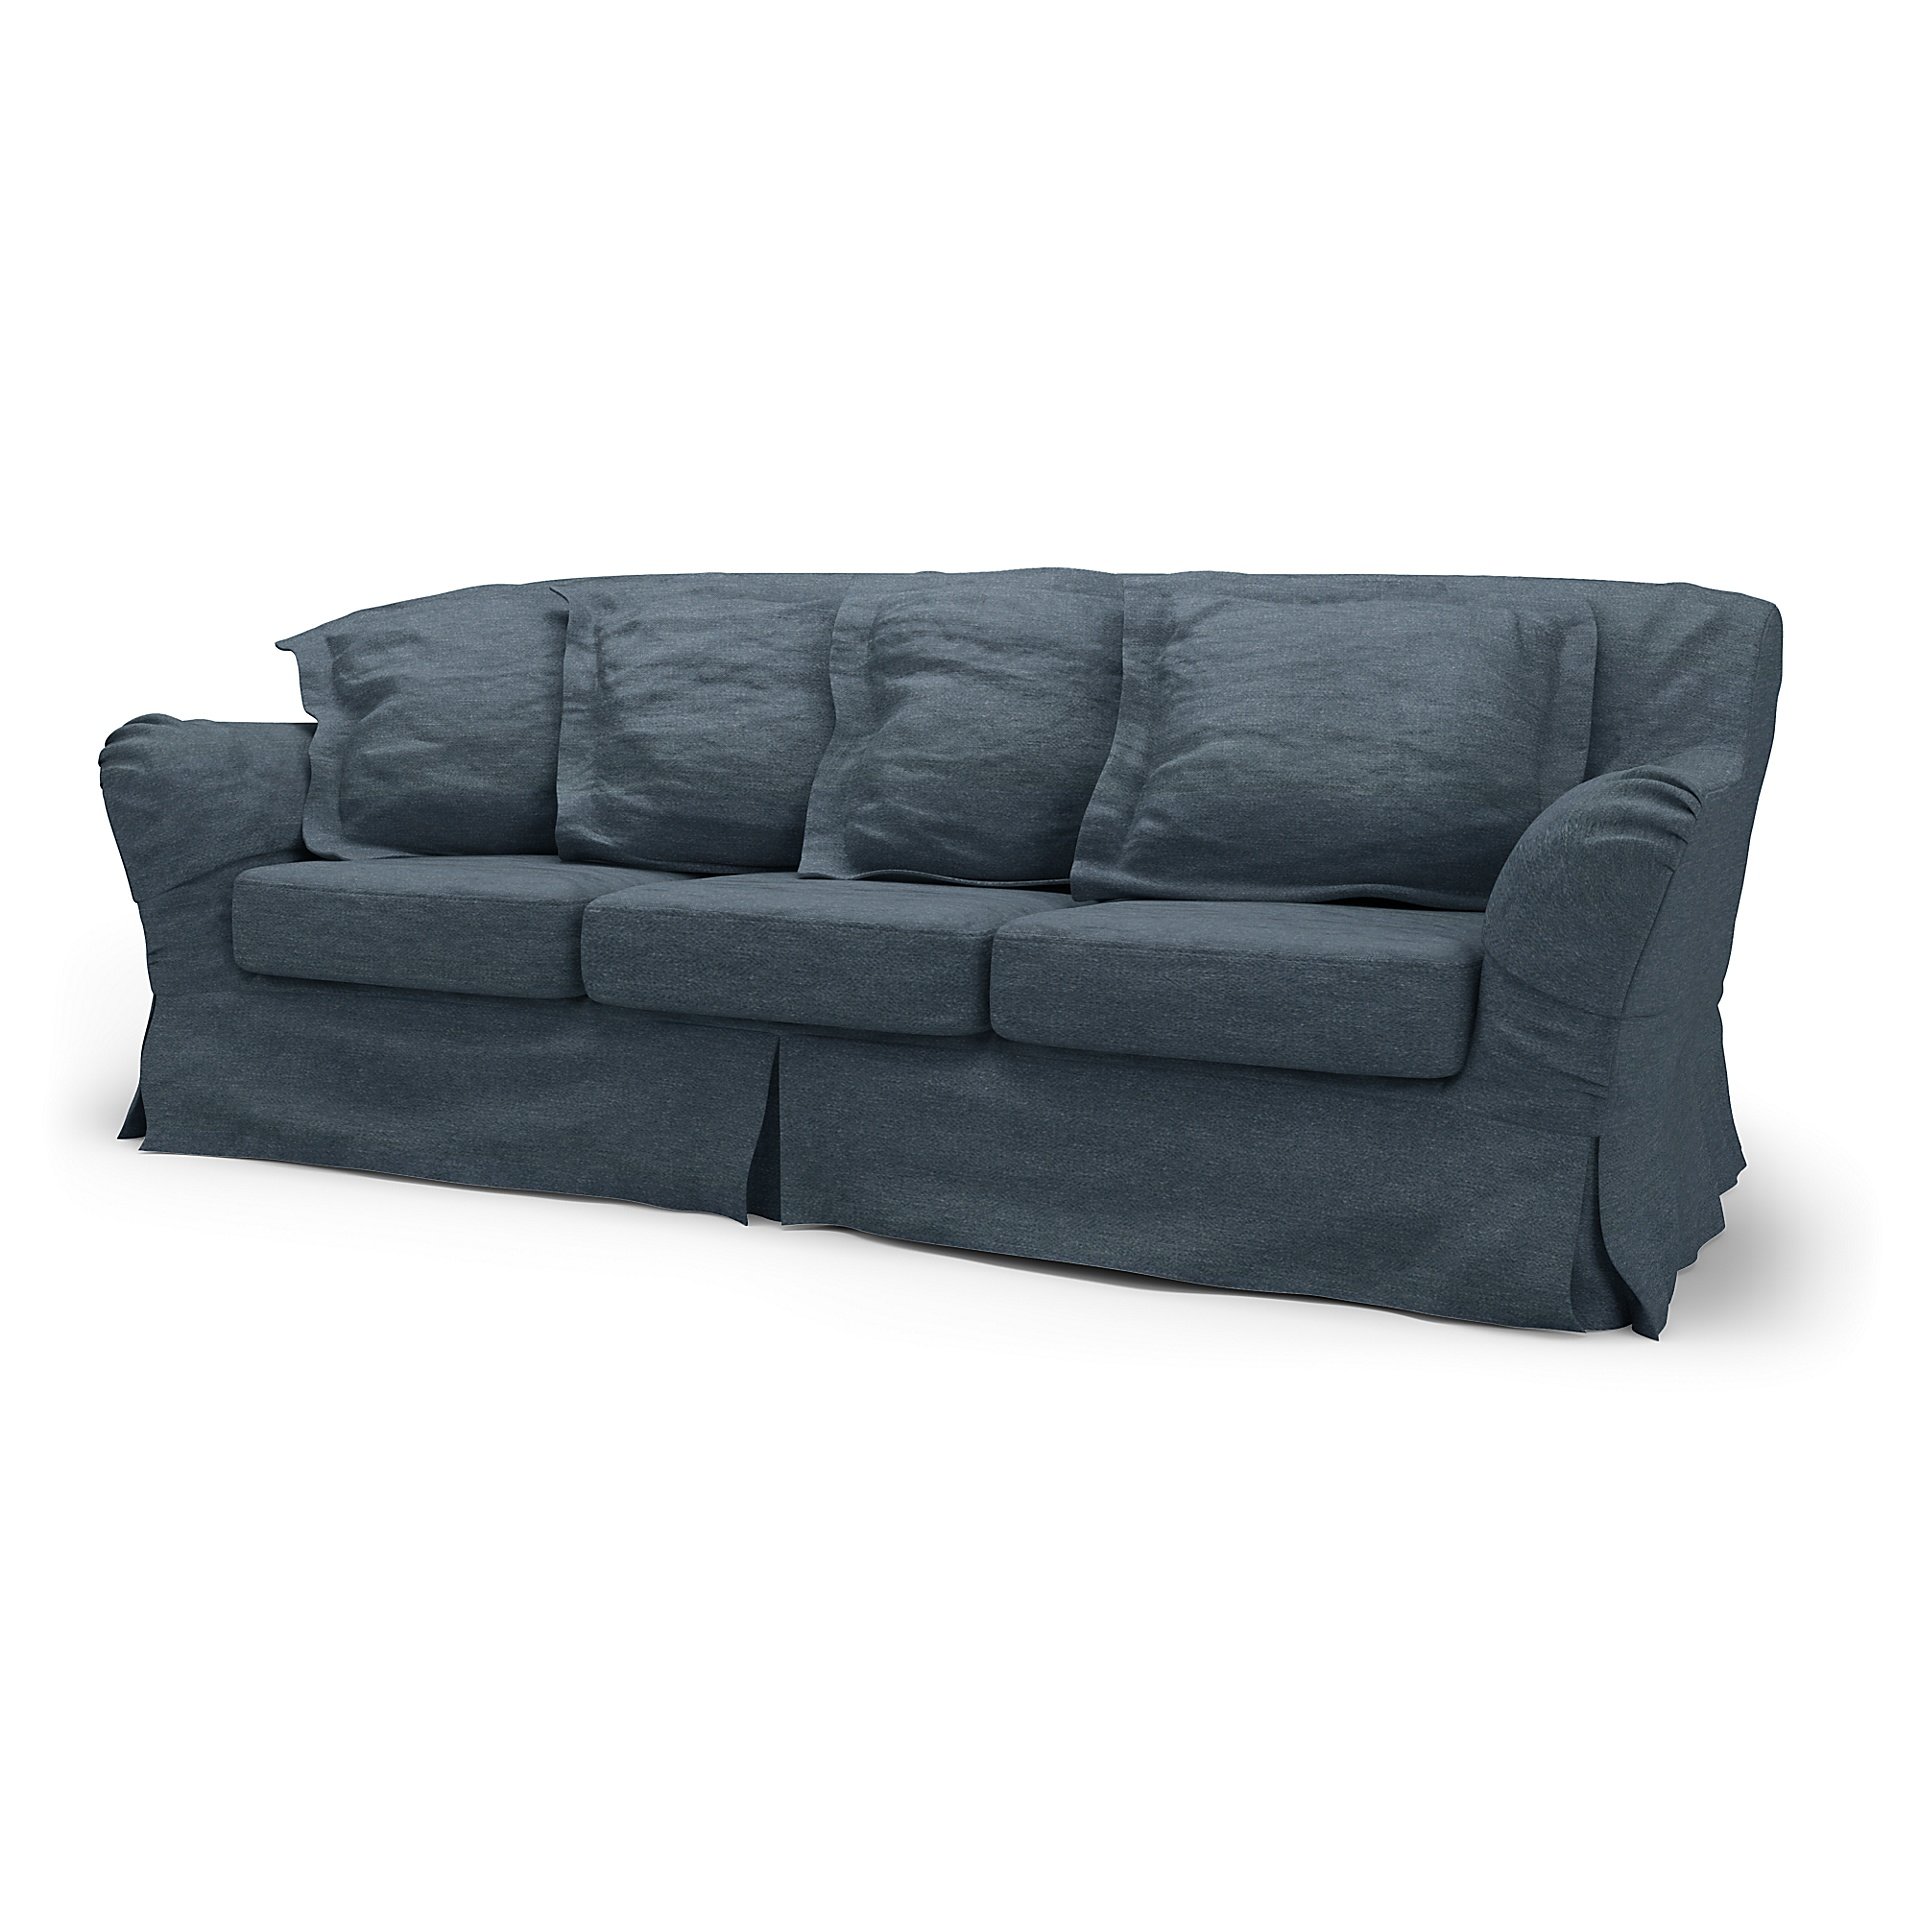 IKEA - Tomelilla 3 Seater Sofa Cover, Denim, Boucle & Texture - Bemz